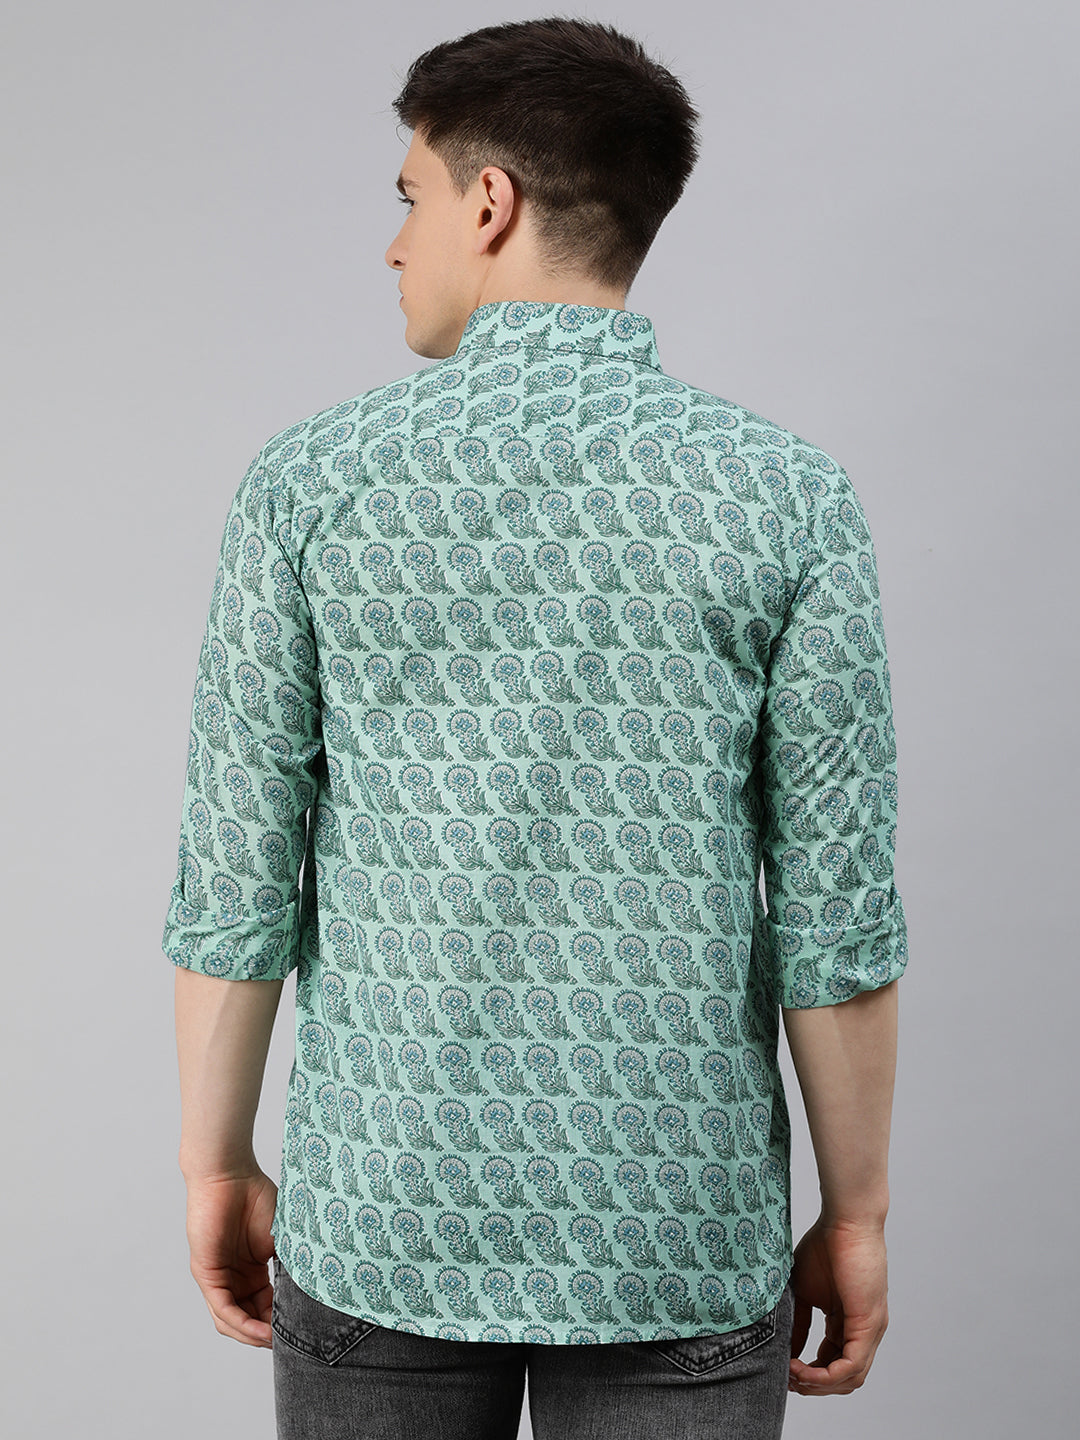 Sea Green Cotton Full Sleeves Shirts For Men-MMF0226 - NOZ2TOZ